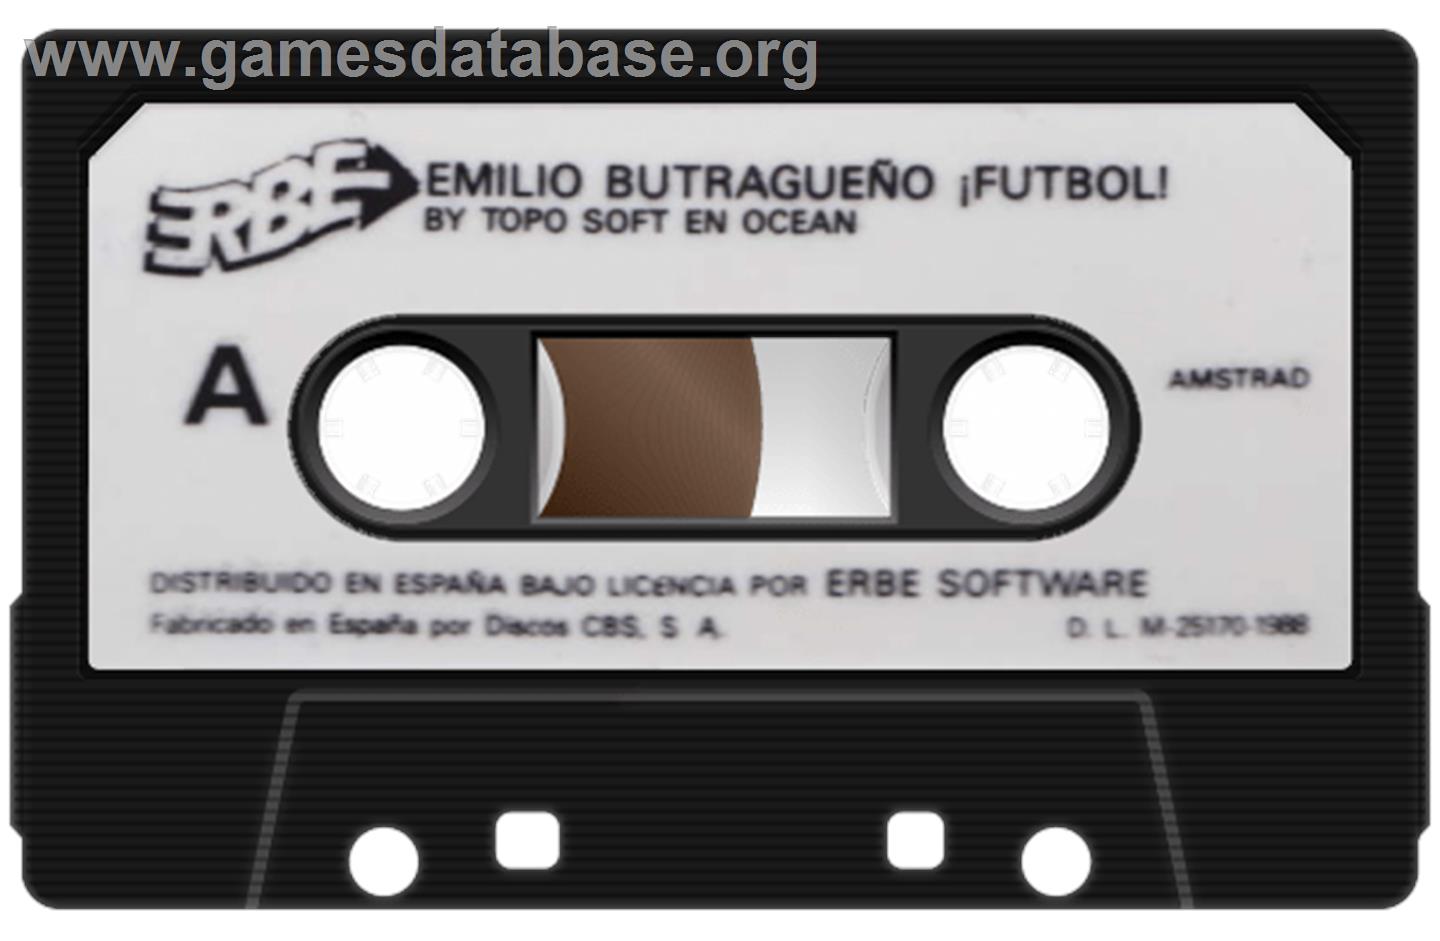 Emilio Butragueño Fútbol - Amstrad CPC - Artwork - Cartridge